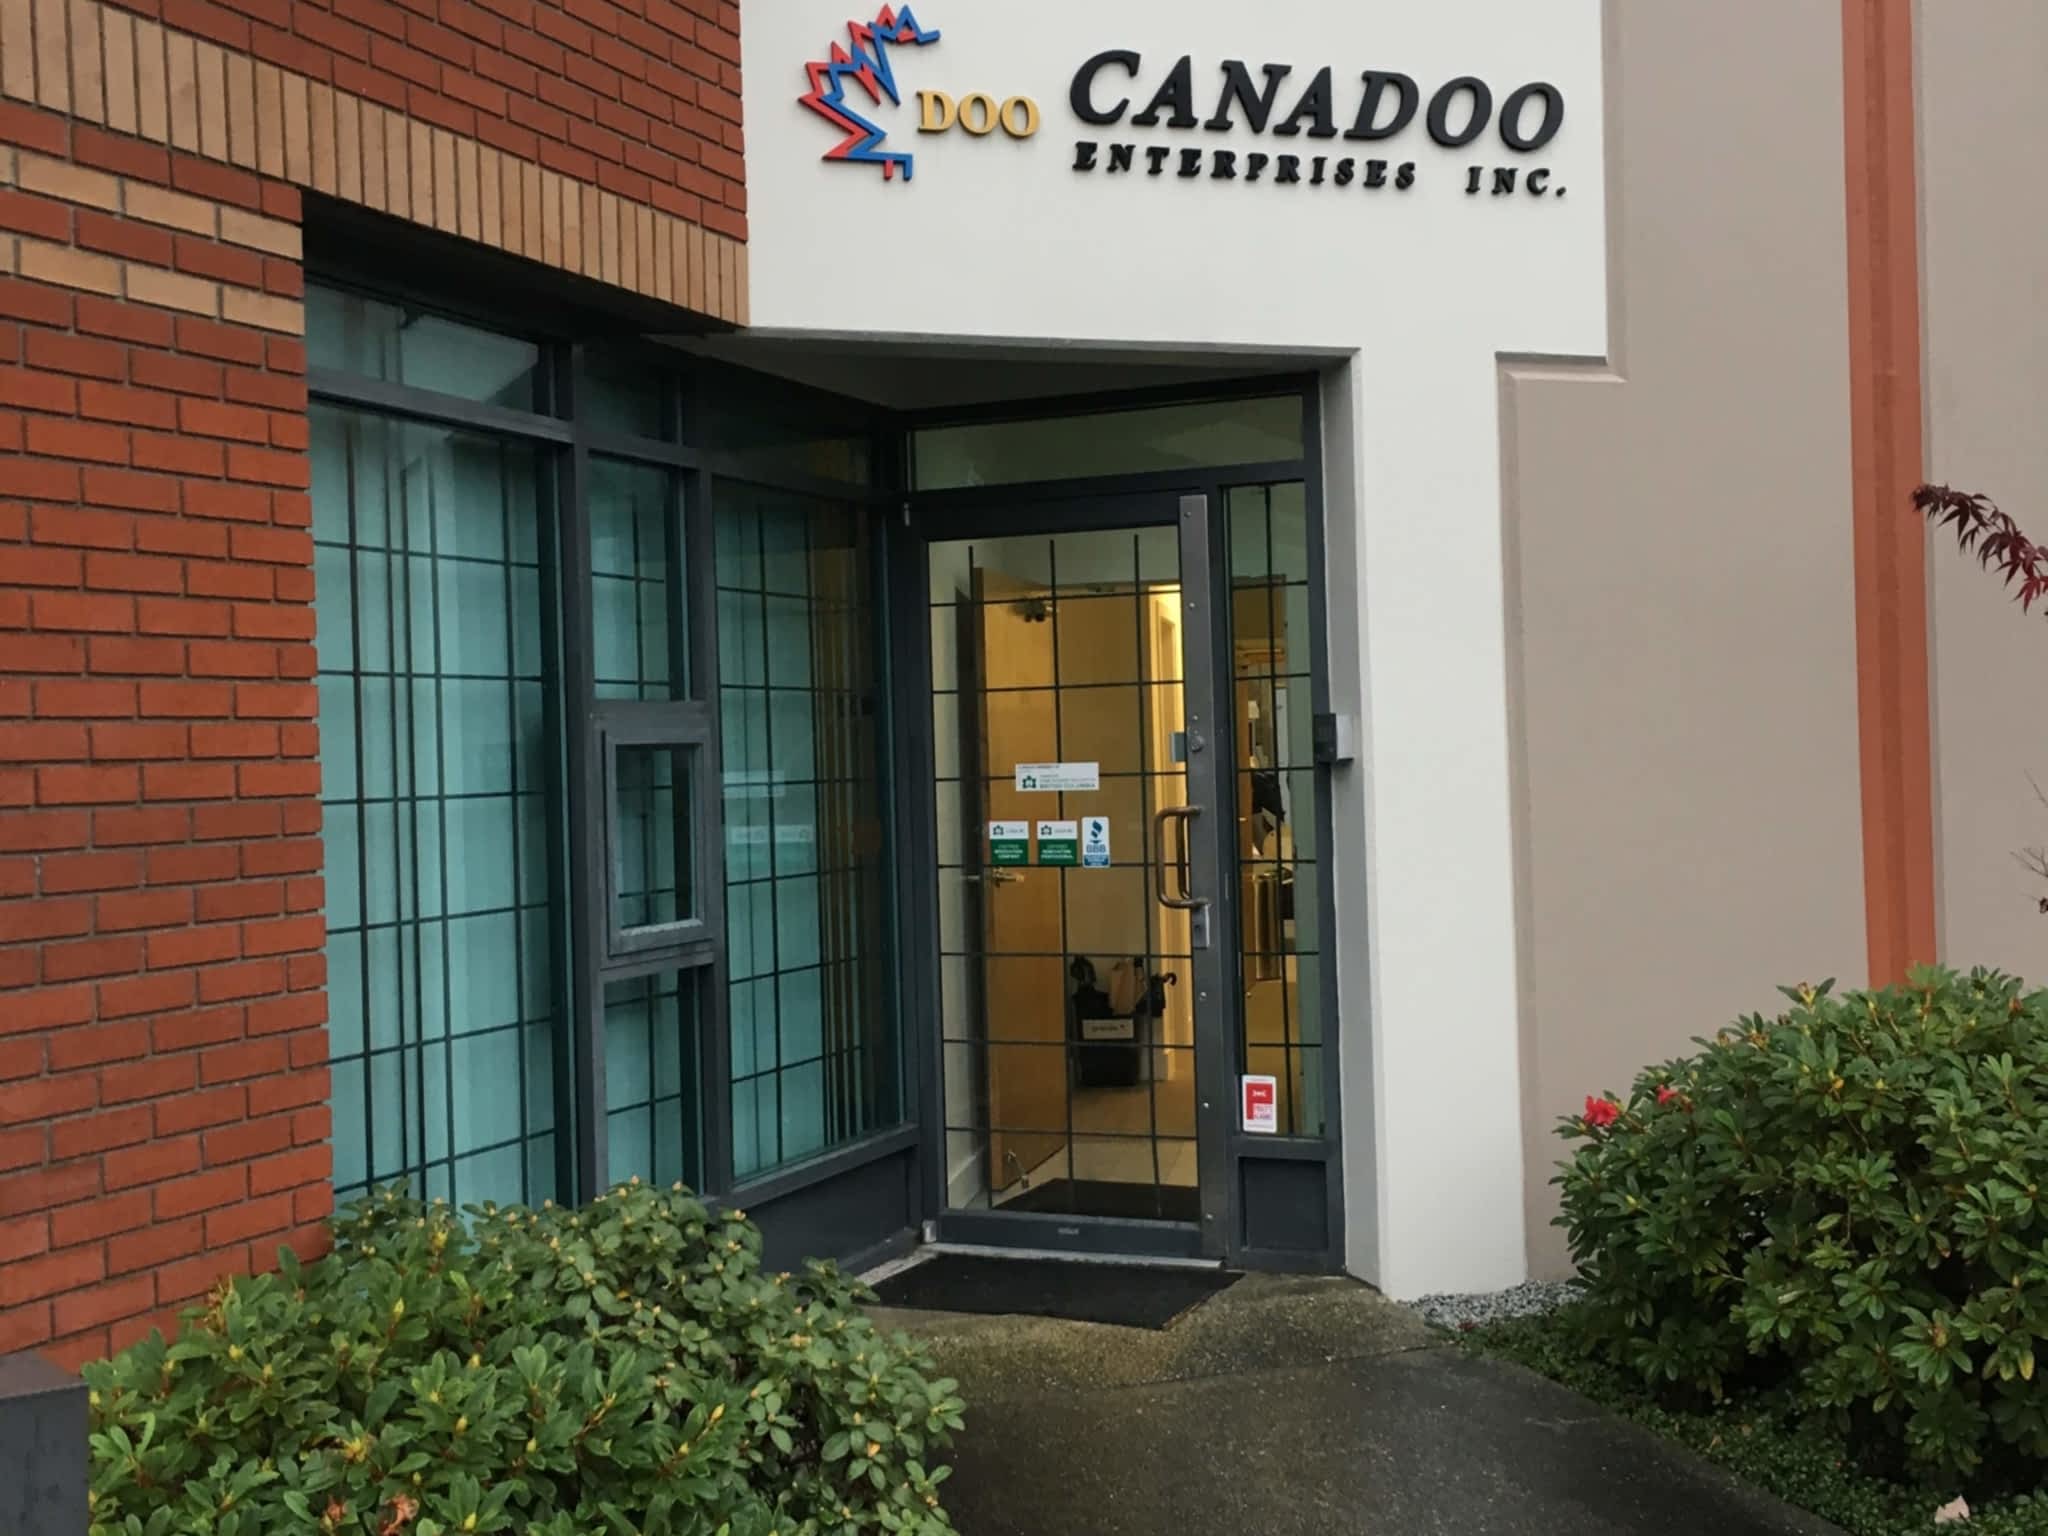 photo Canadoo Enterprises Inc